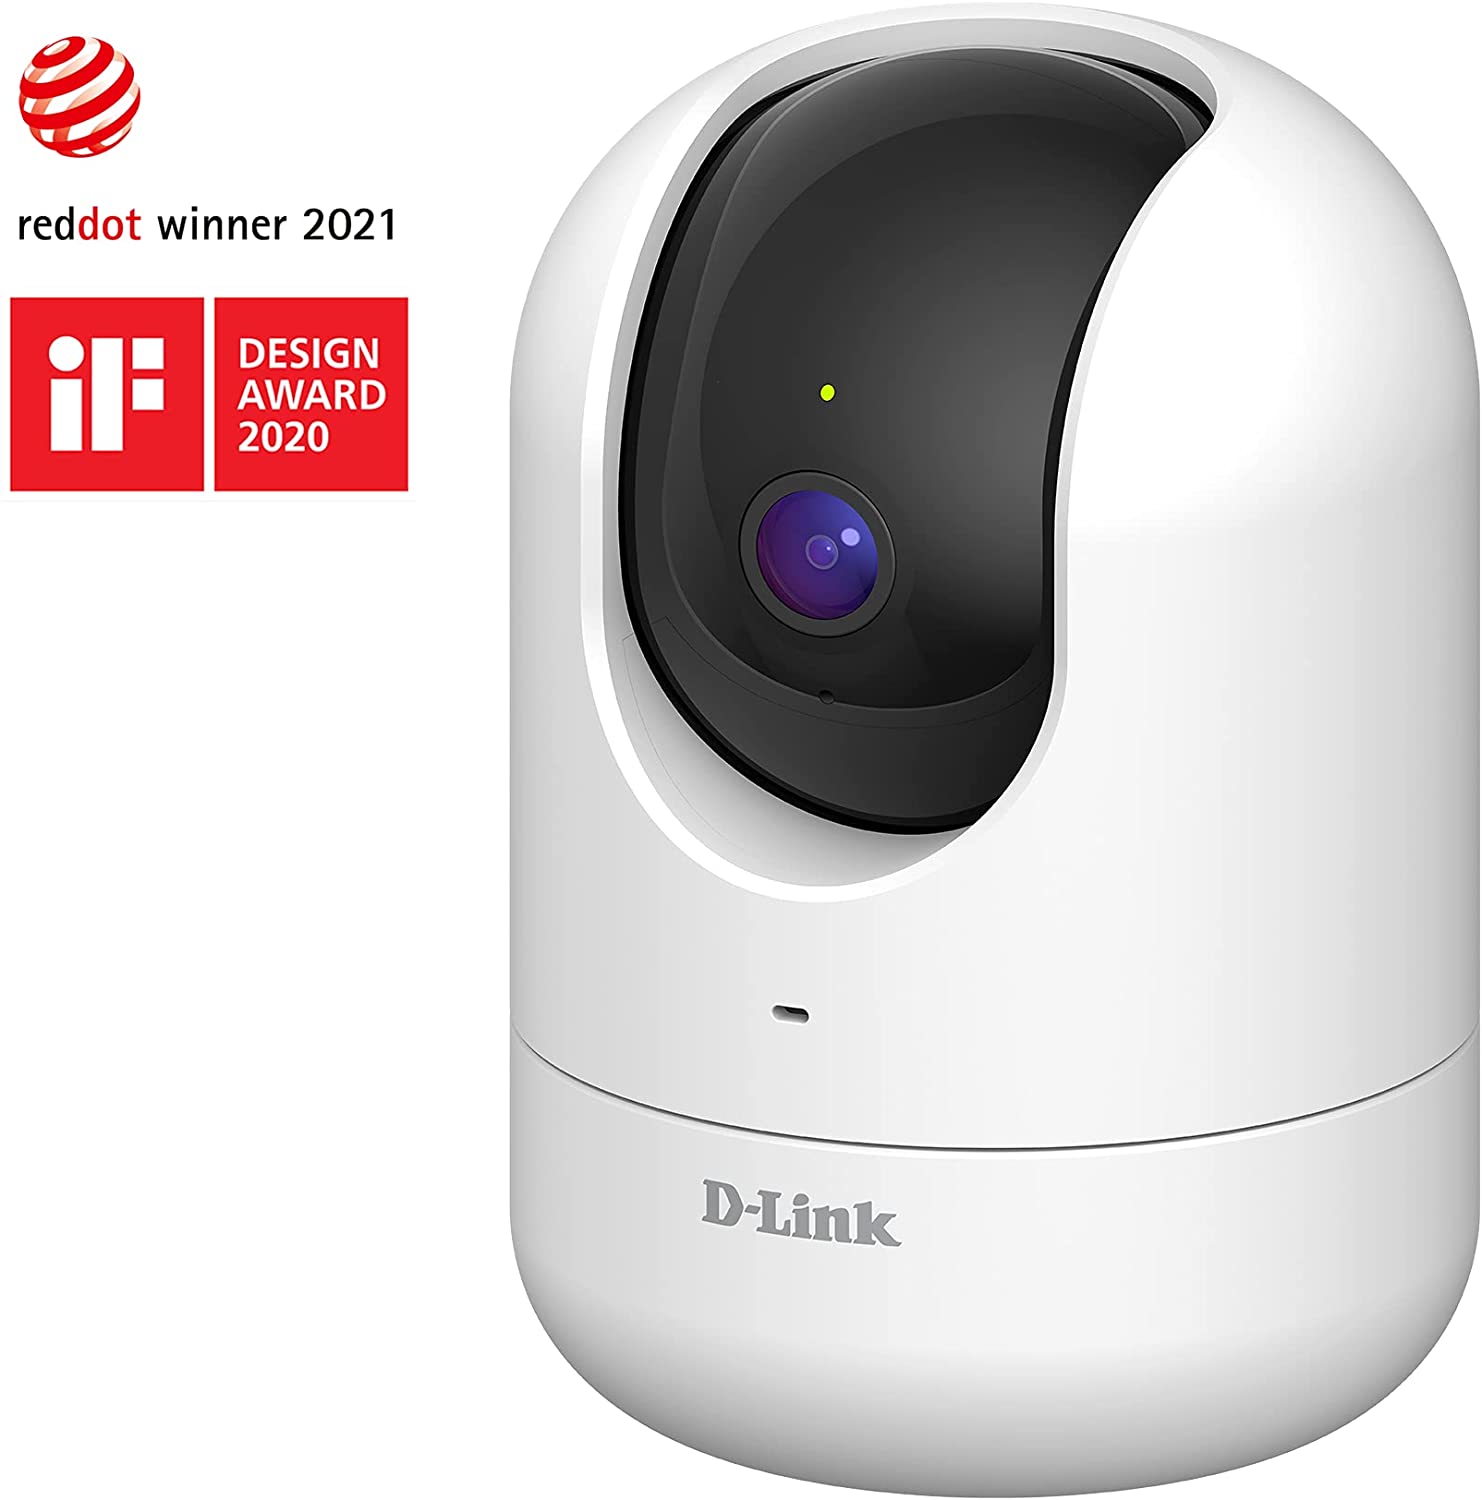 D-Link Videocamera mydlink DCS-8526LH Wi-Fi